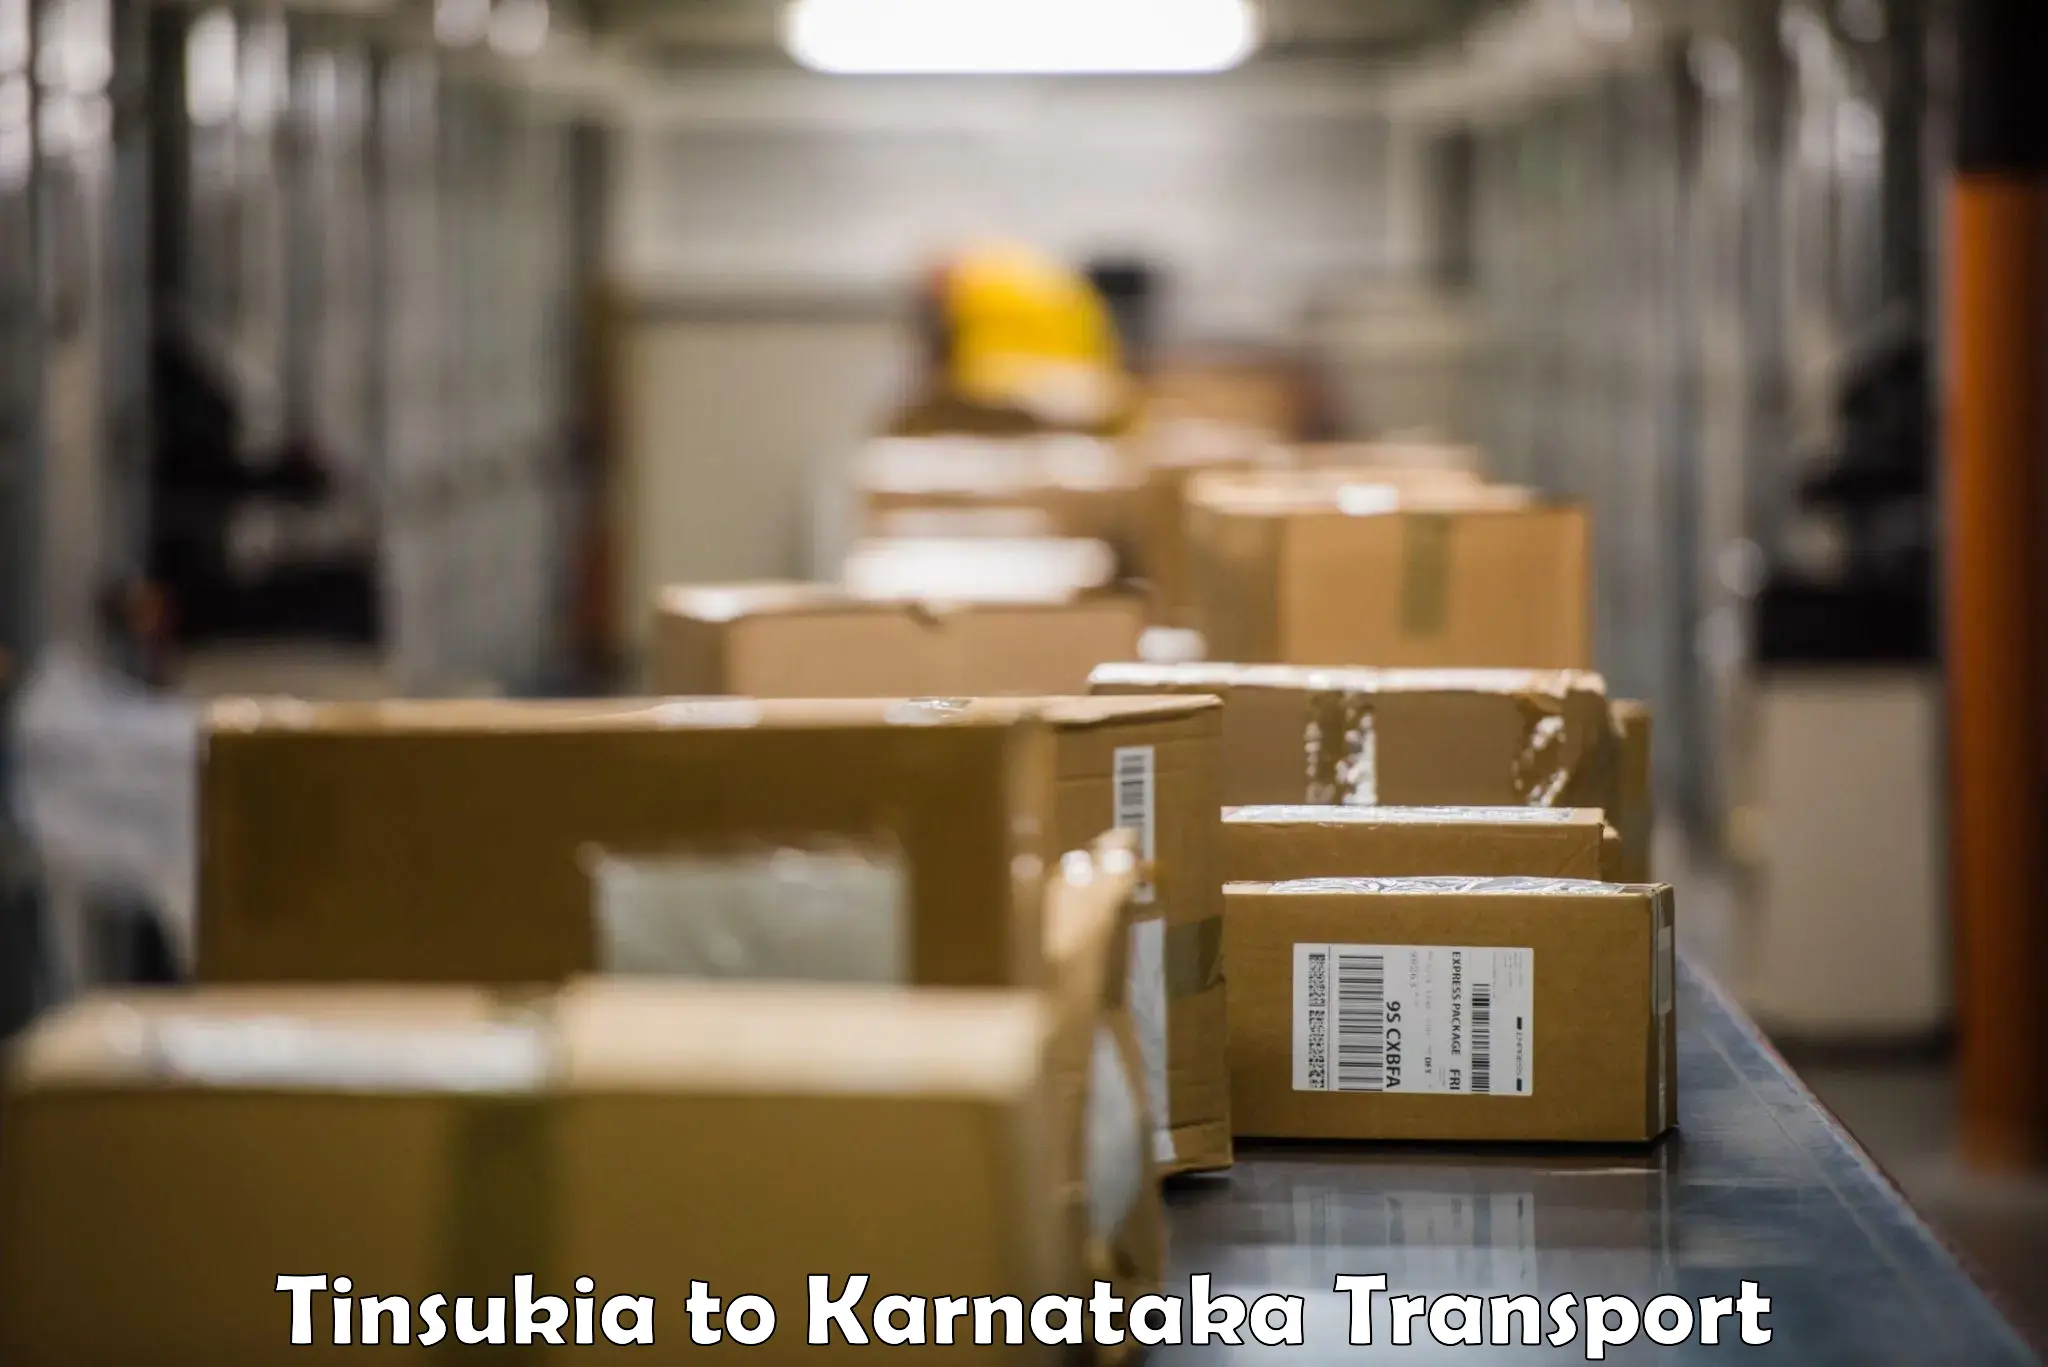 Goods delivery service Tinsukia to Tiptur